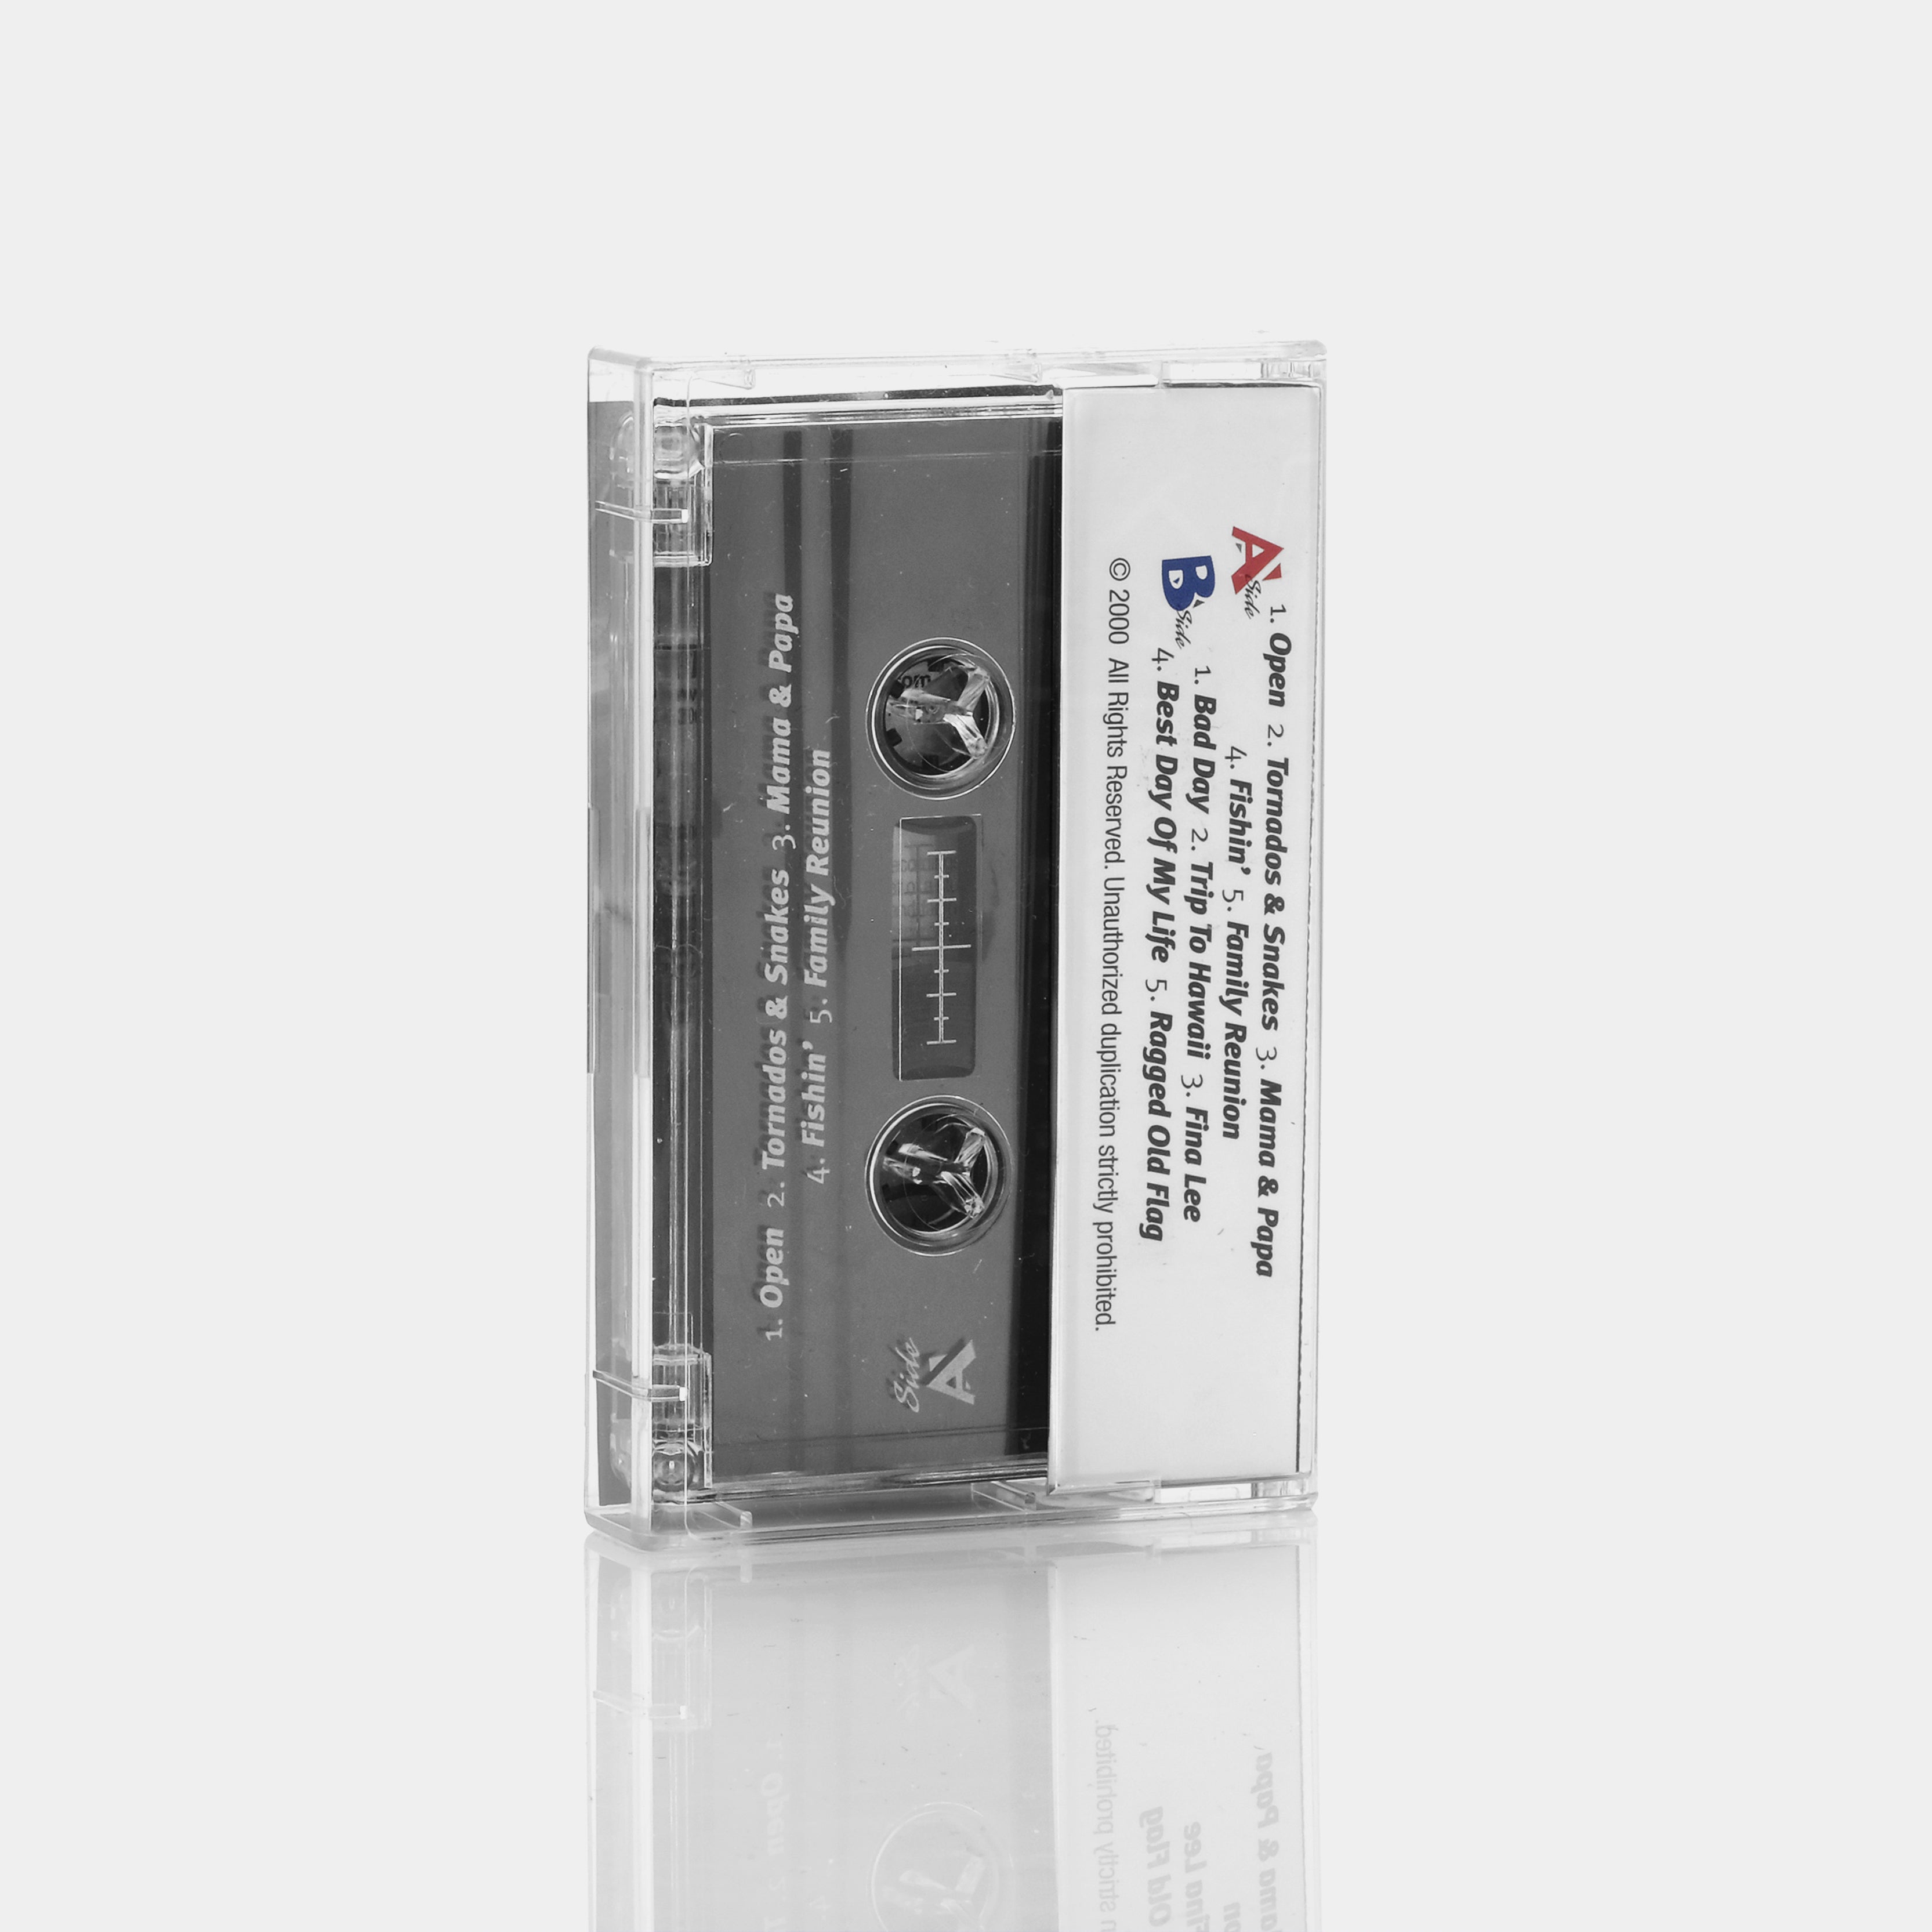 Paul Harris - Live Cassette Tape